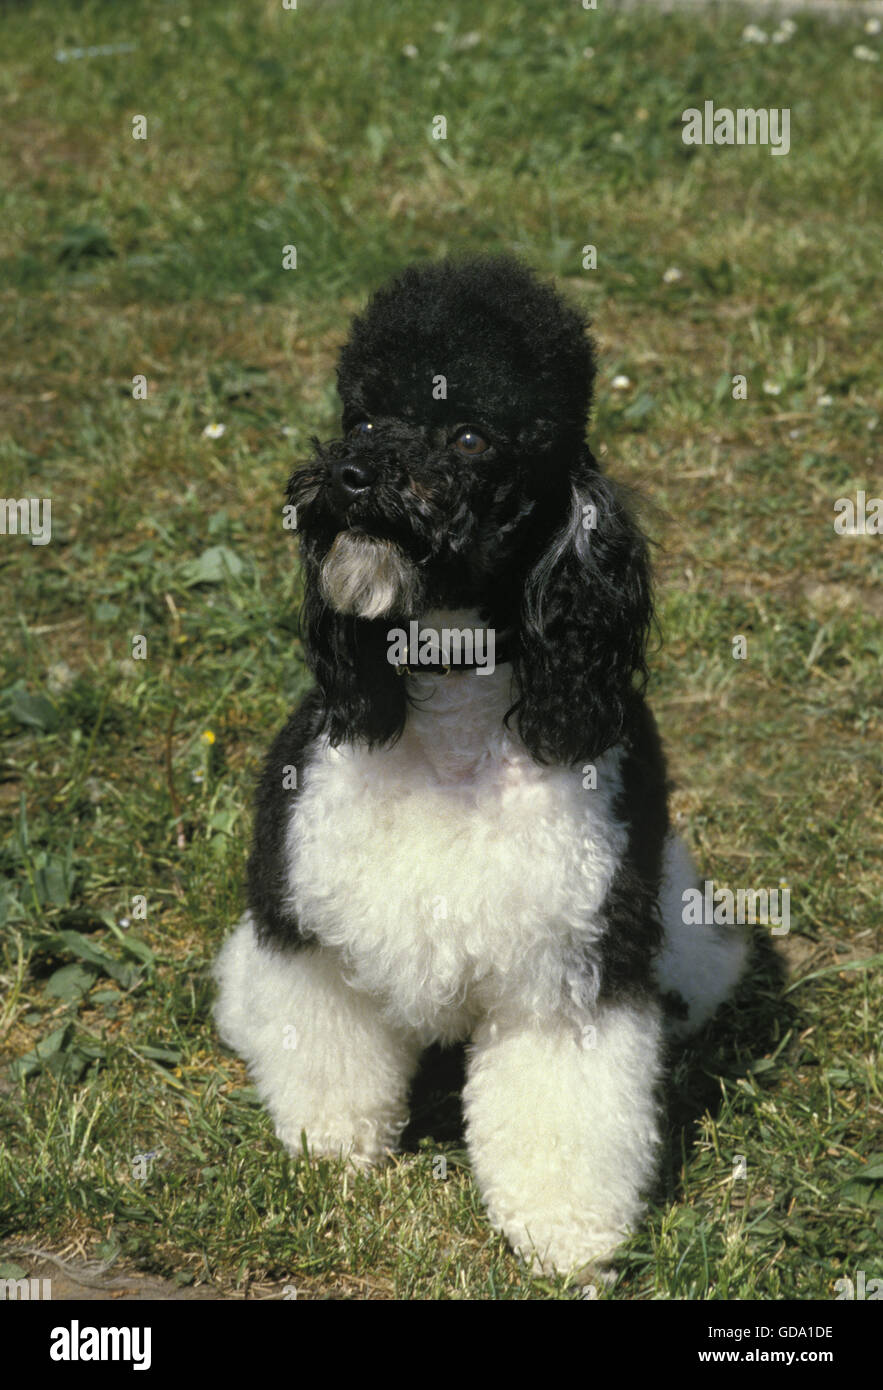 Black and White Miniature Poodle Dog Stock Photo